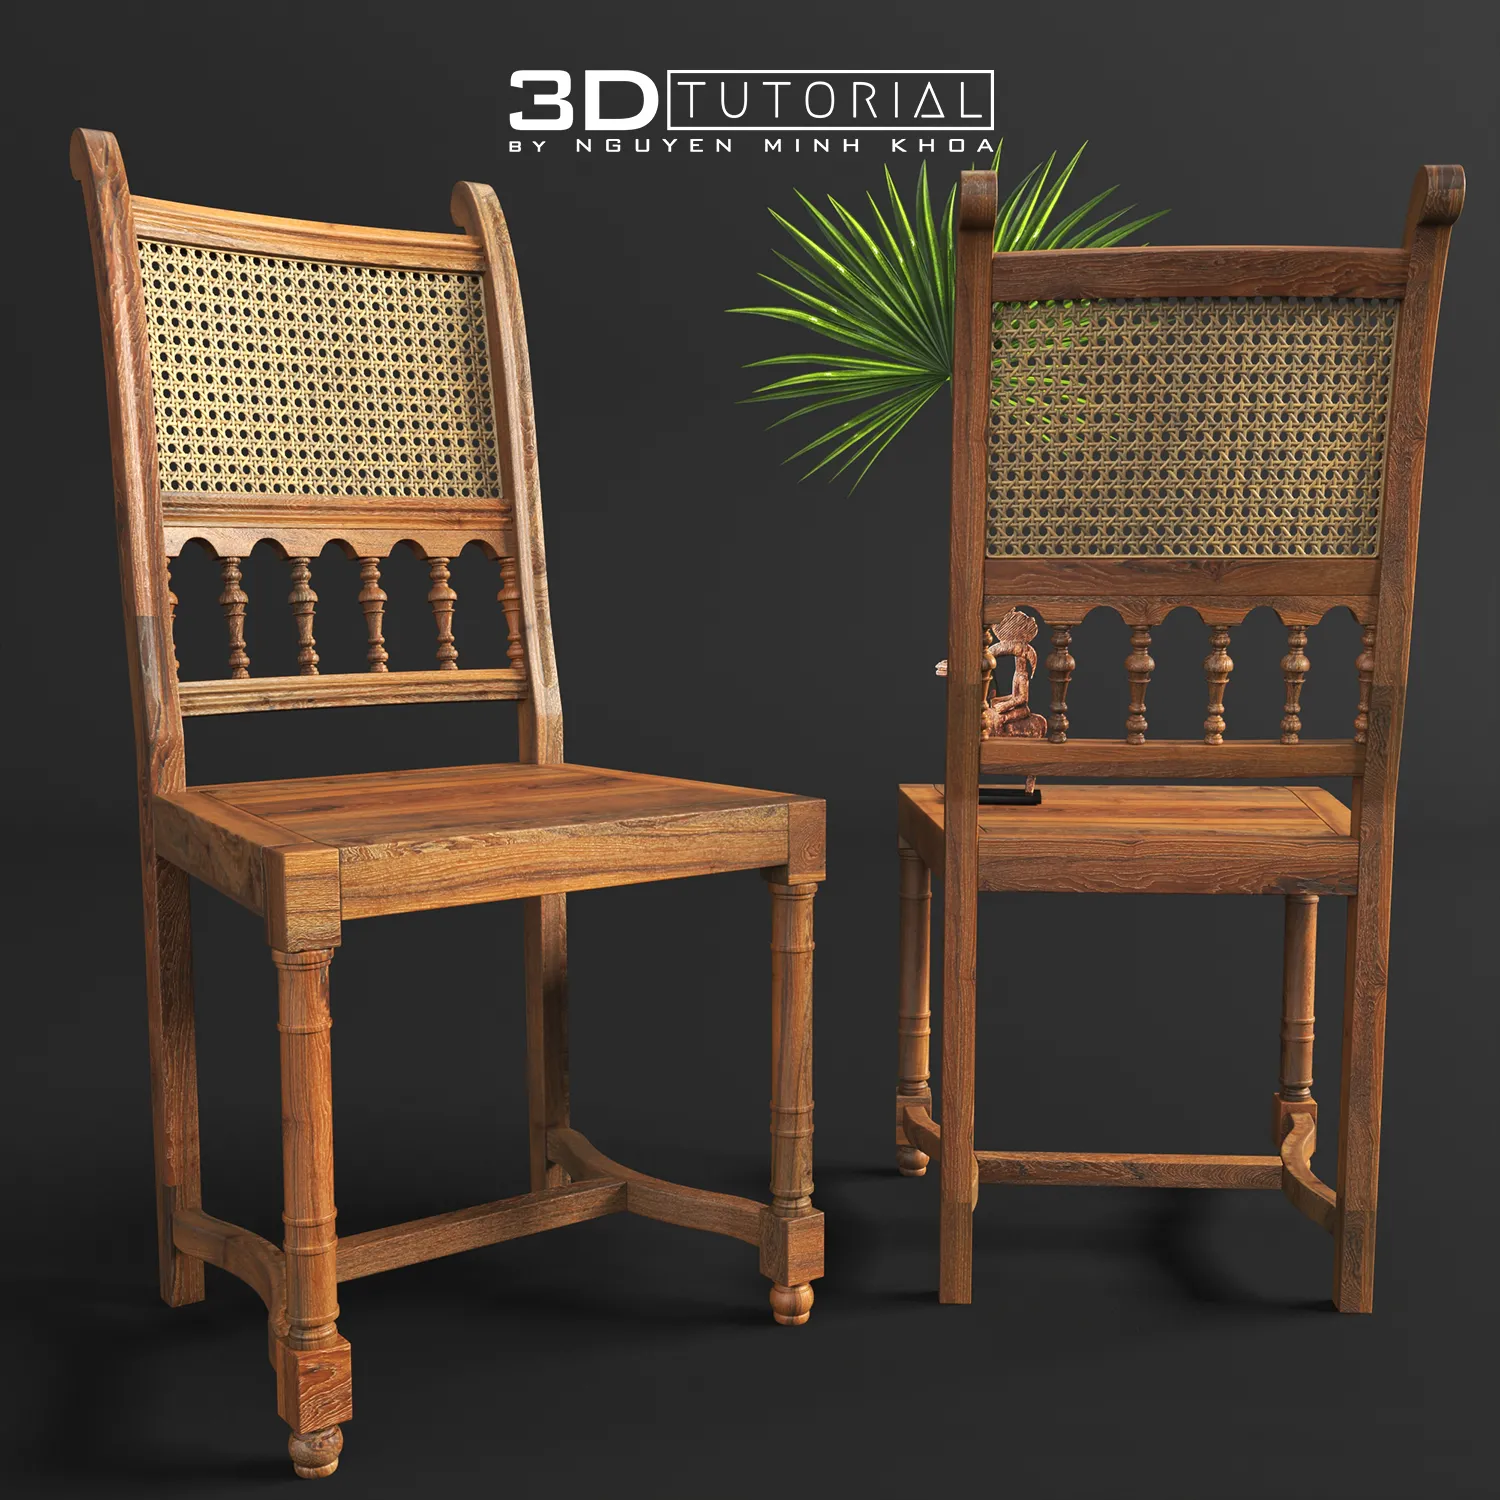 FURNITURE 3D MODELS – Rattan chair 2 modelbyNguyenMinhKhoa